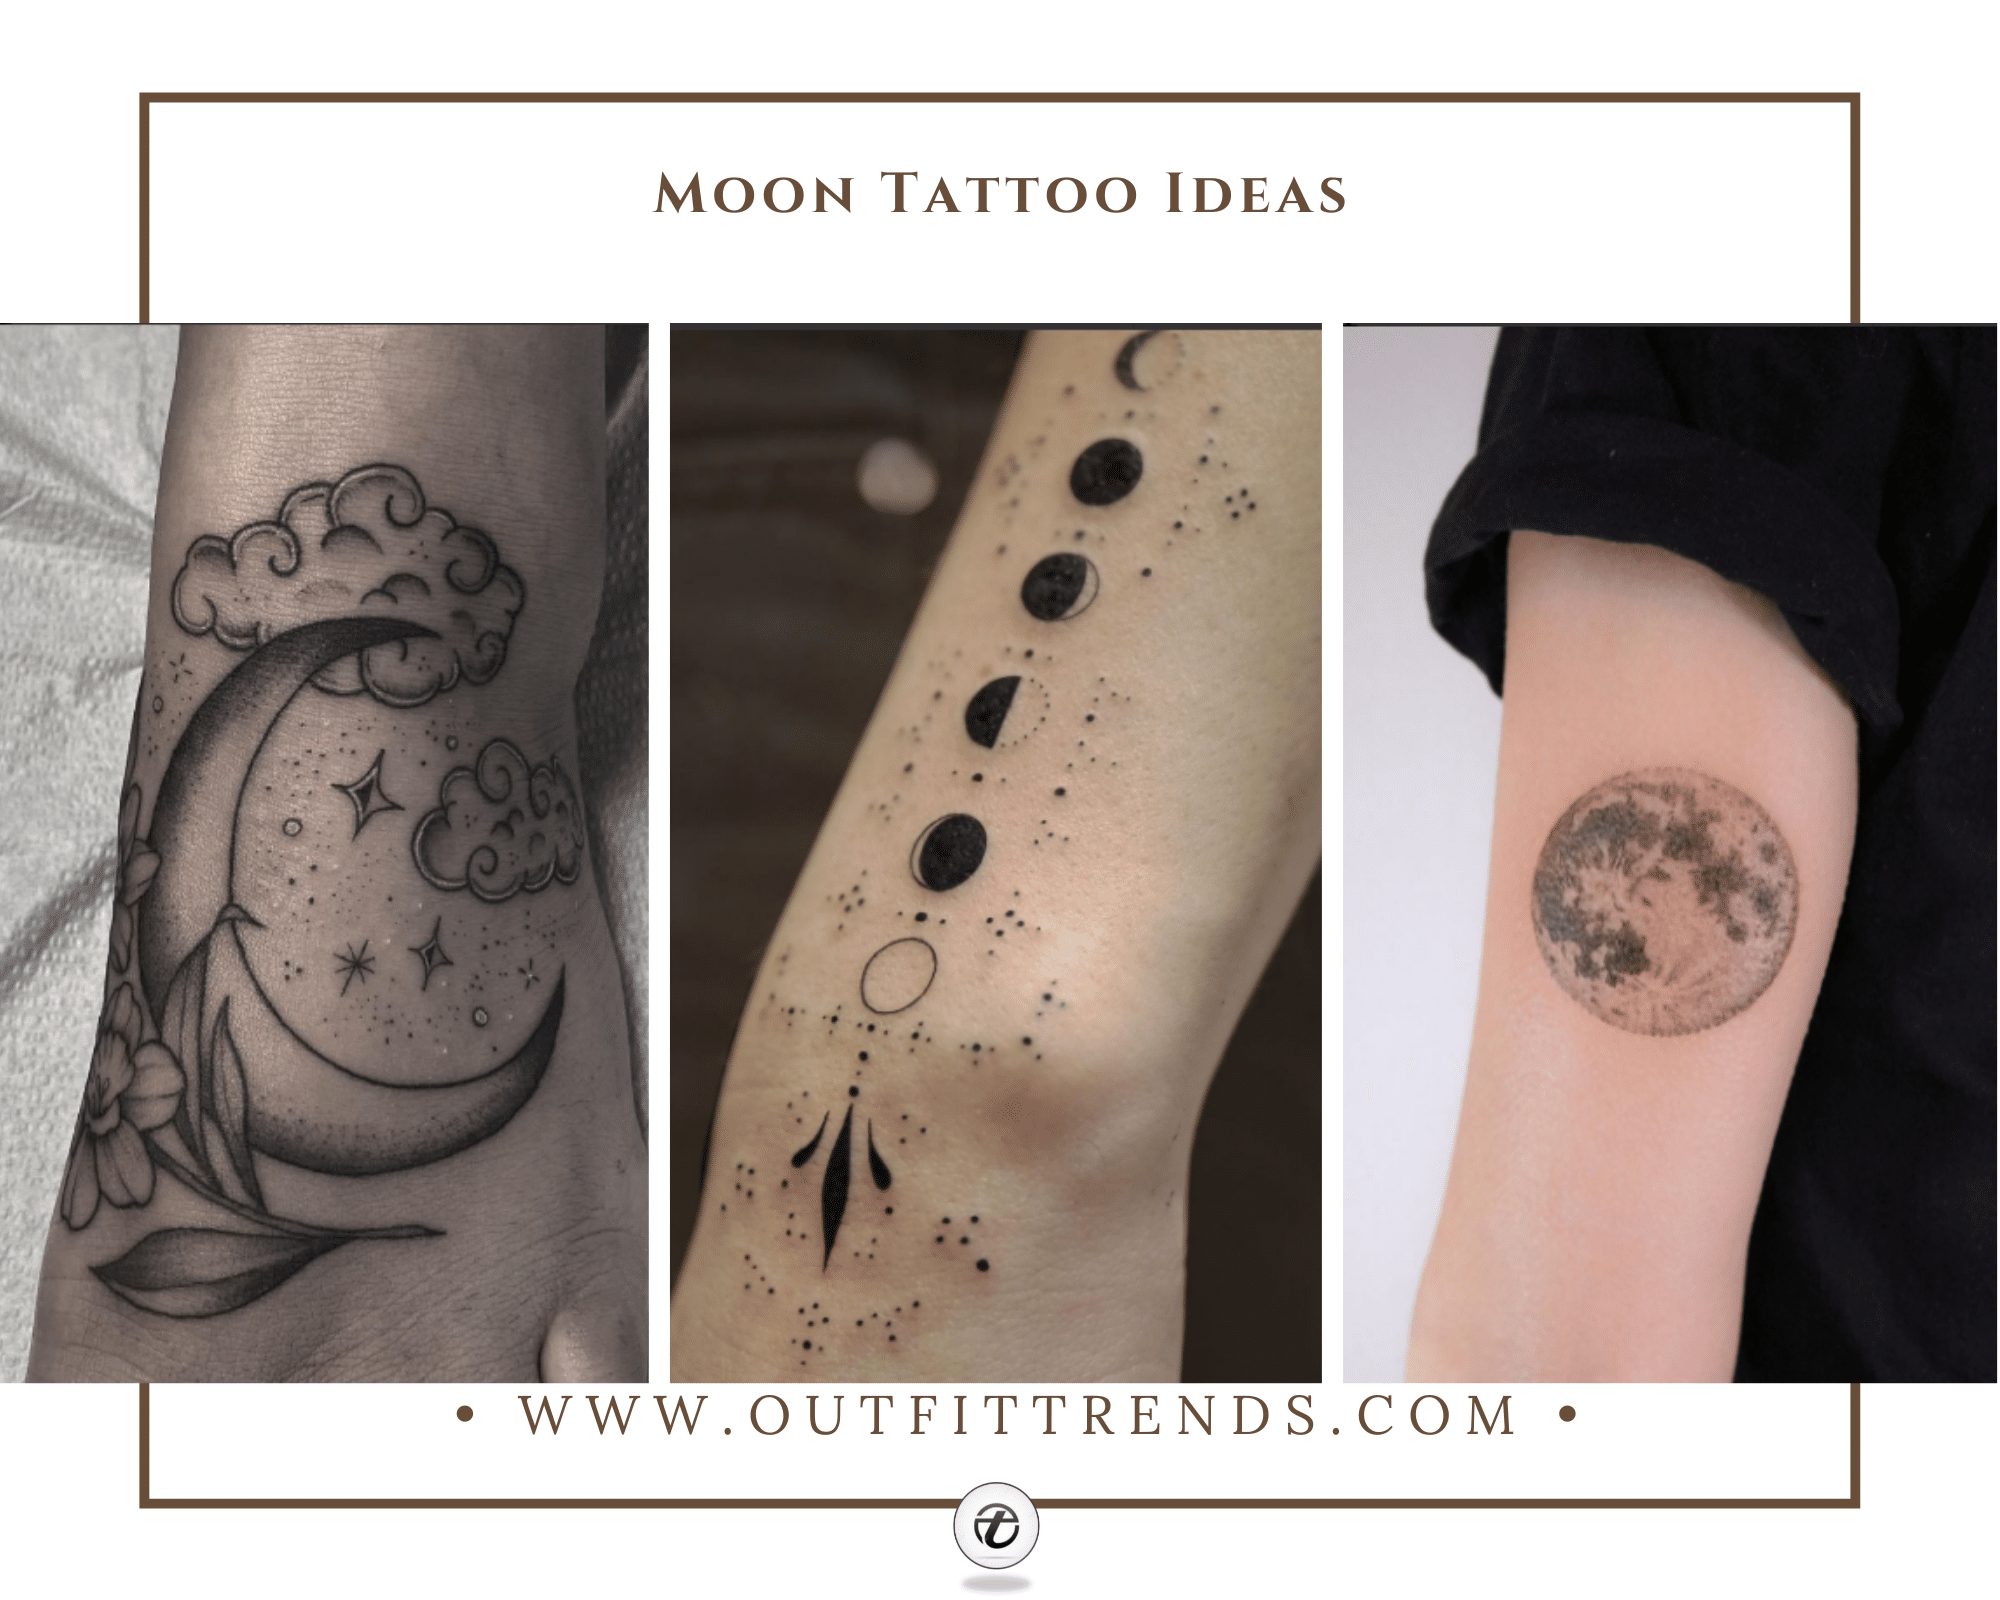 19 Moon Tattoo Design Ideas for Women - Mom's Got the Stuff